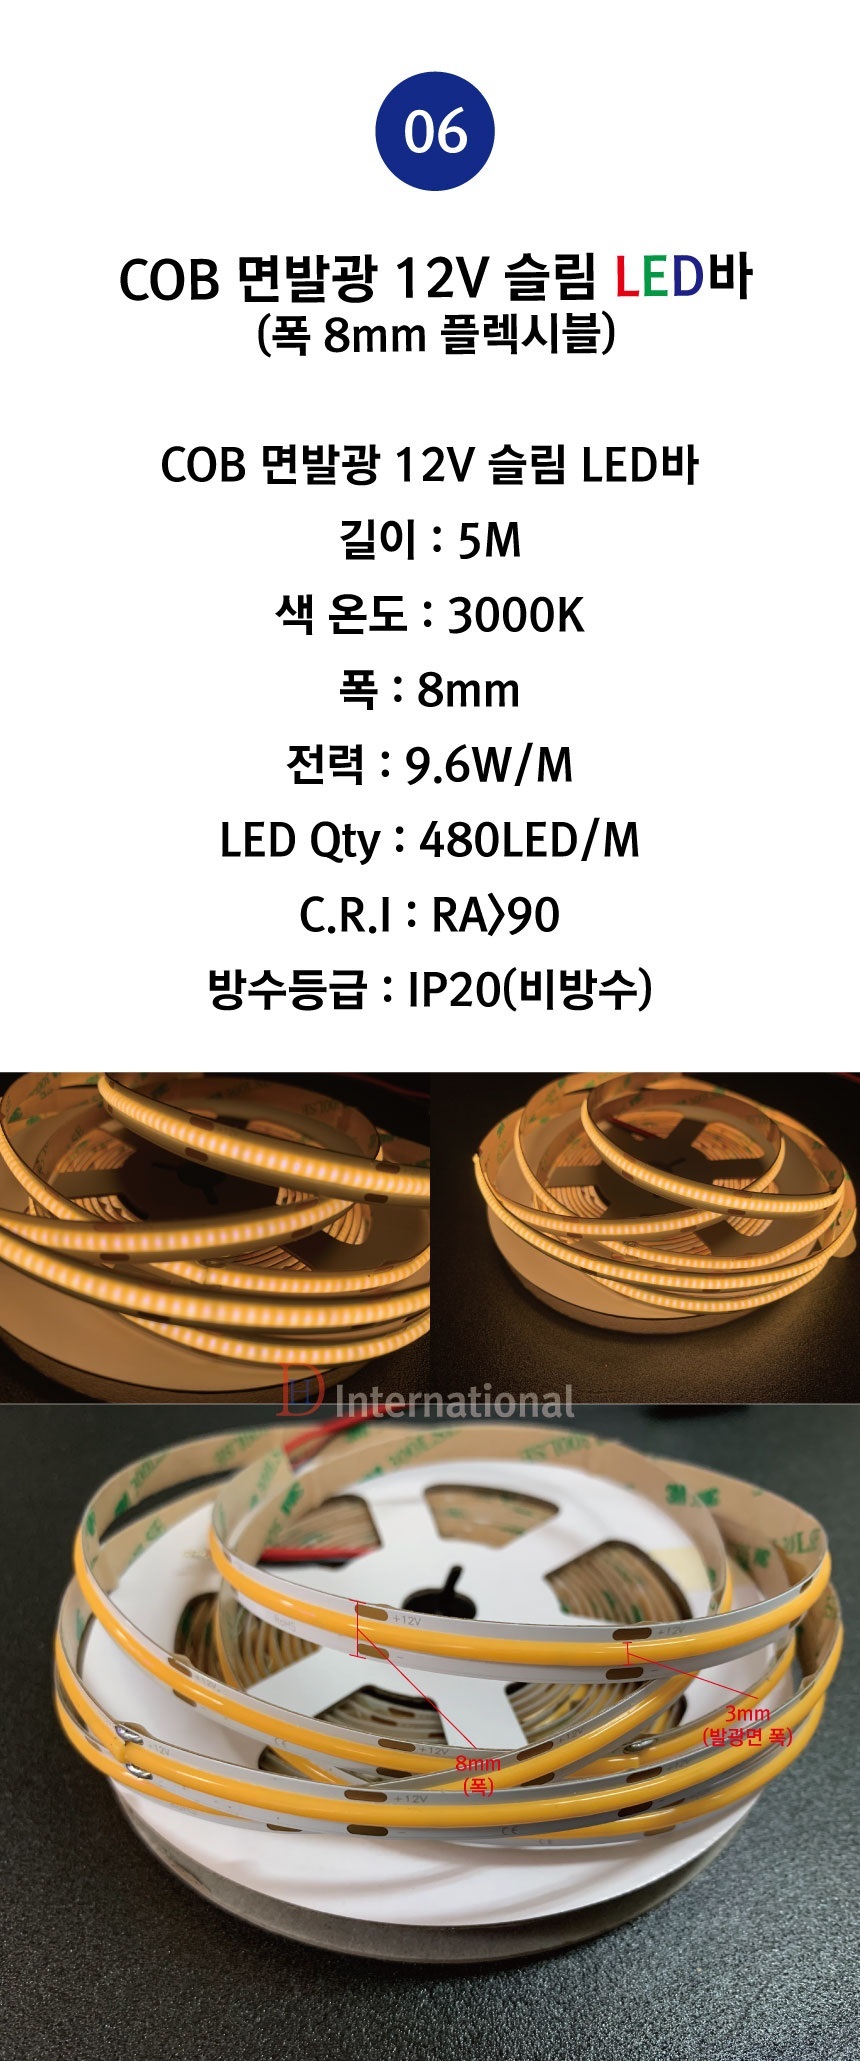 COB-LED-480LED-8mm-3000K-%EC%83%81%ED%92